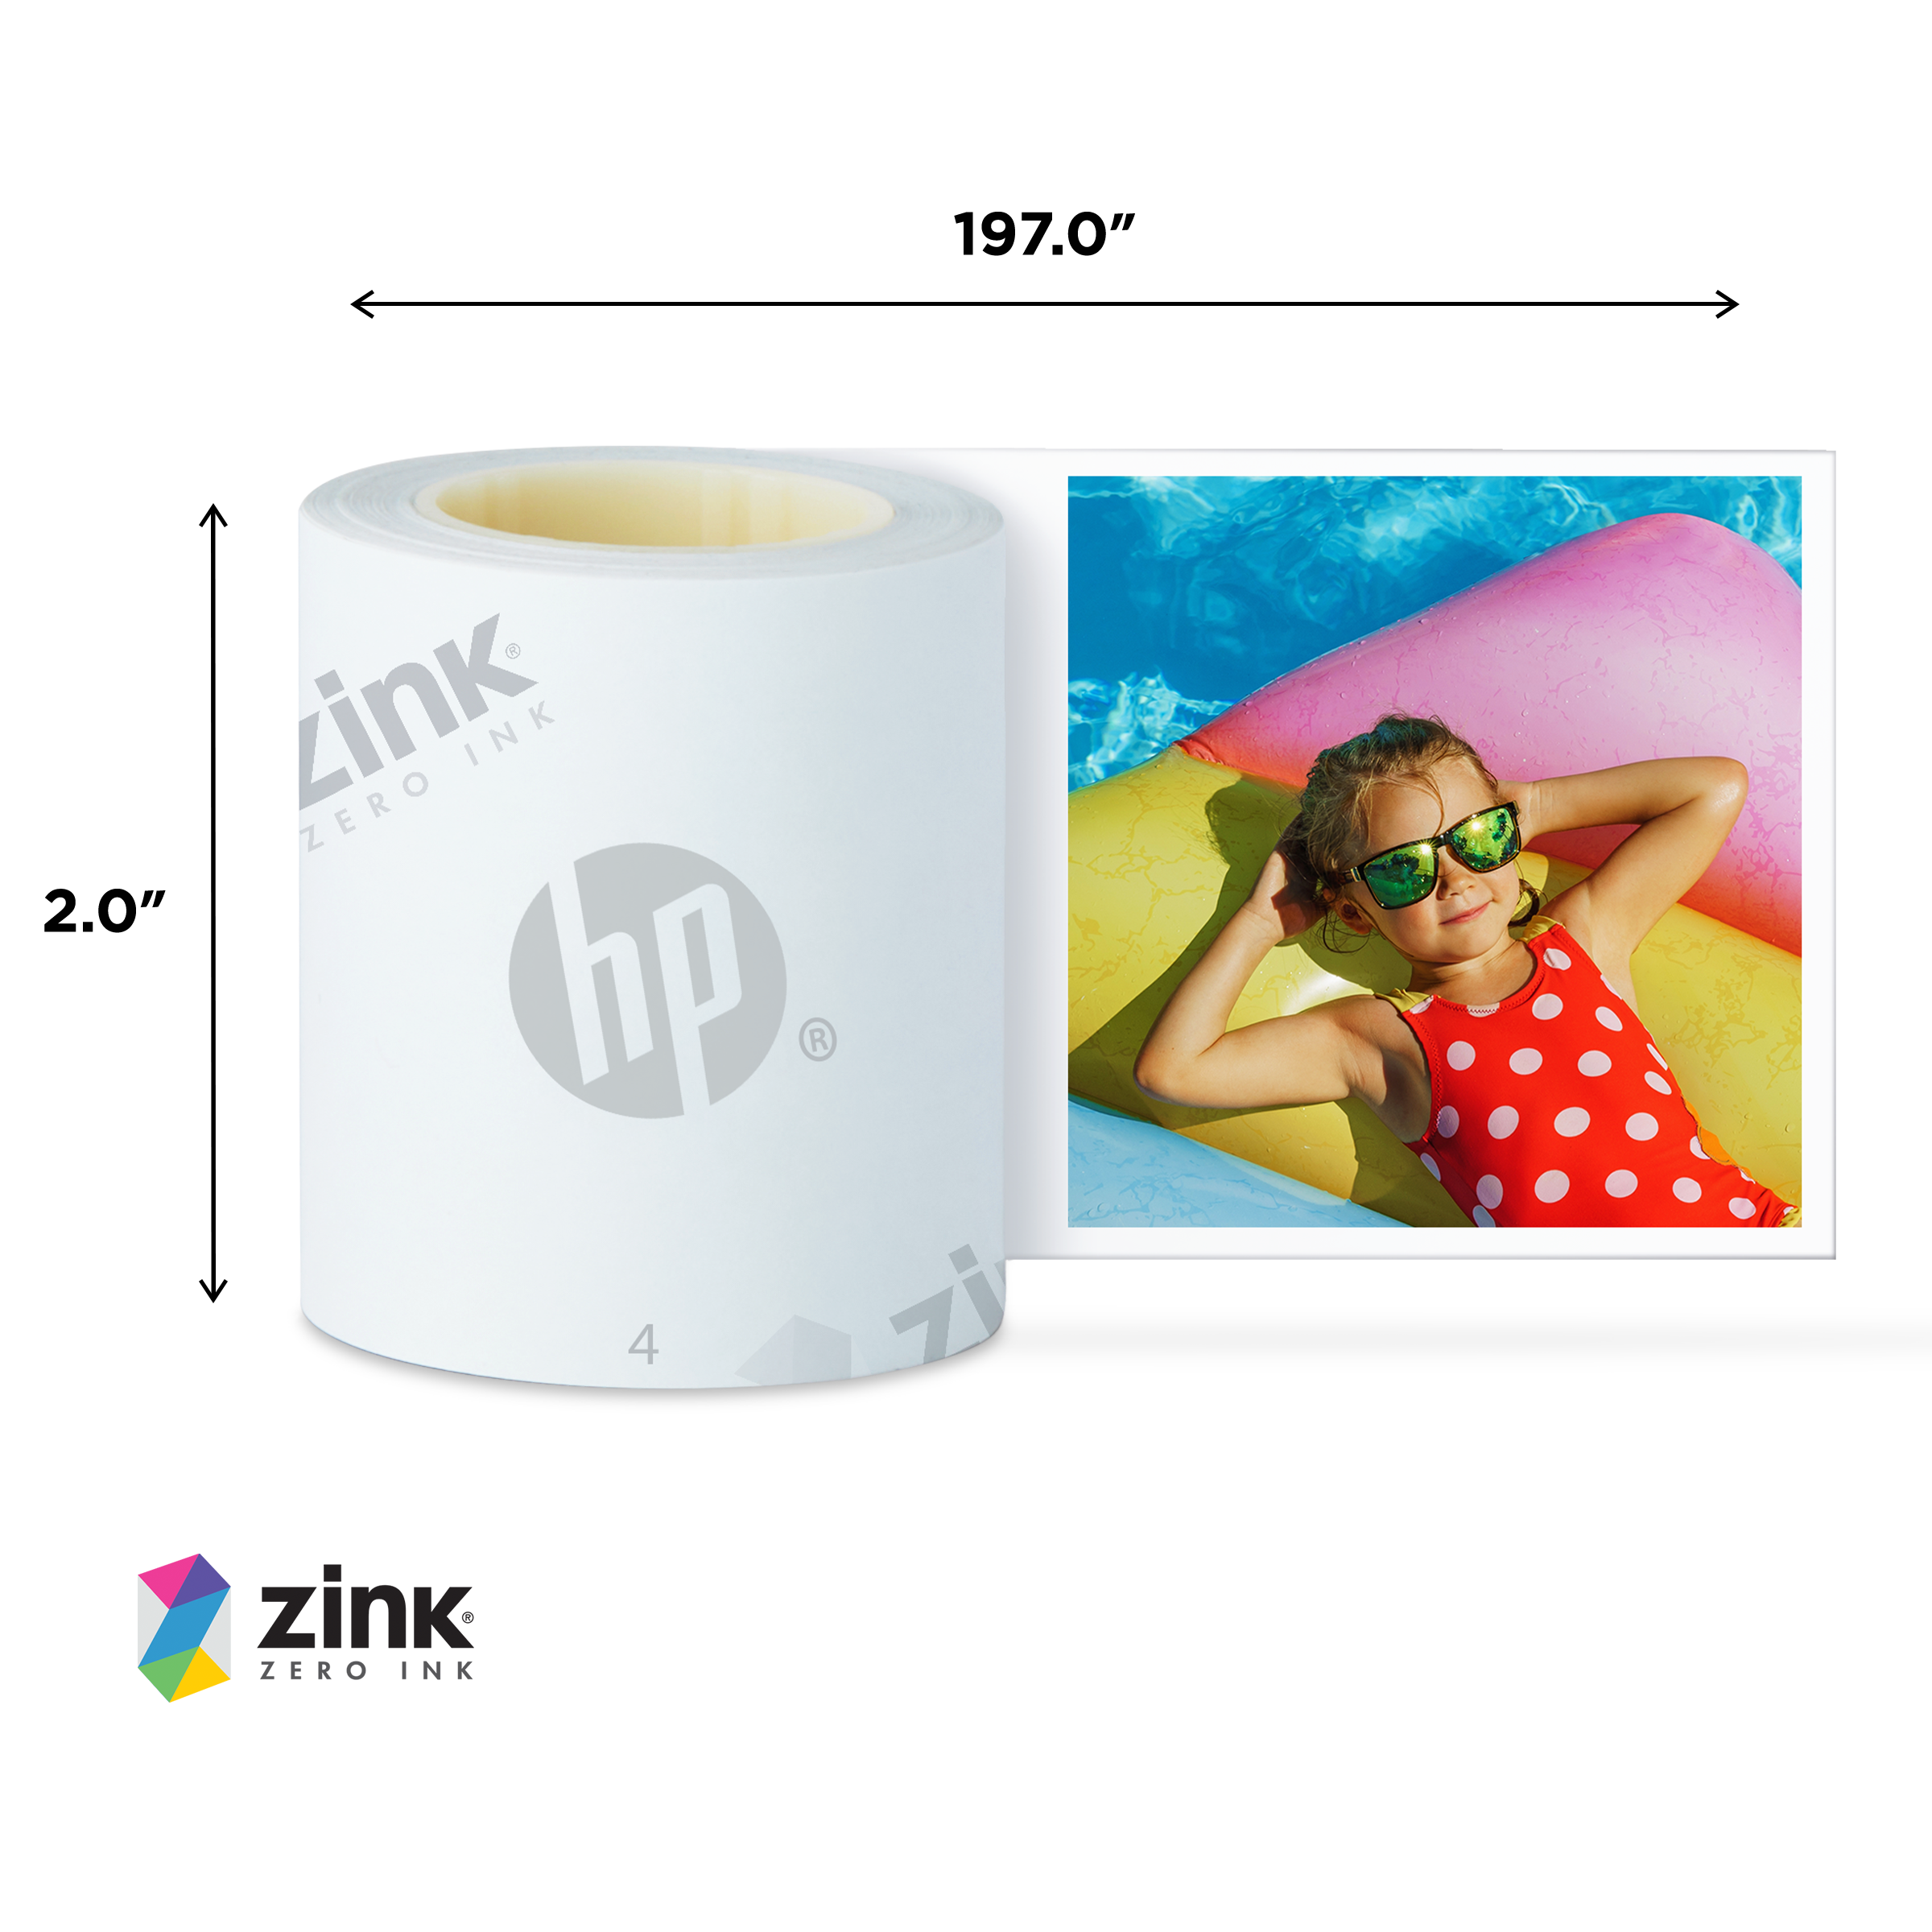 HP Sprocket Panorama Instant Portable Color Label & Photo Printer (Pink) Craft Bundle Sprocket Printers